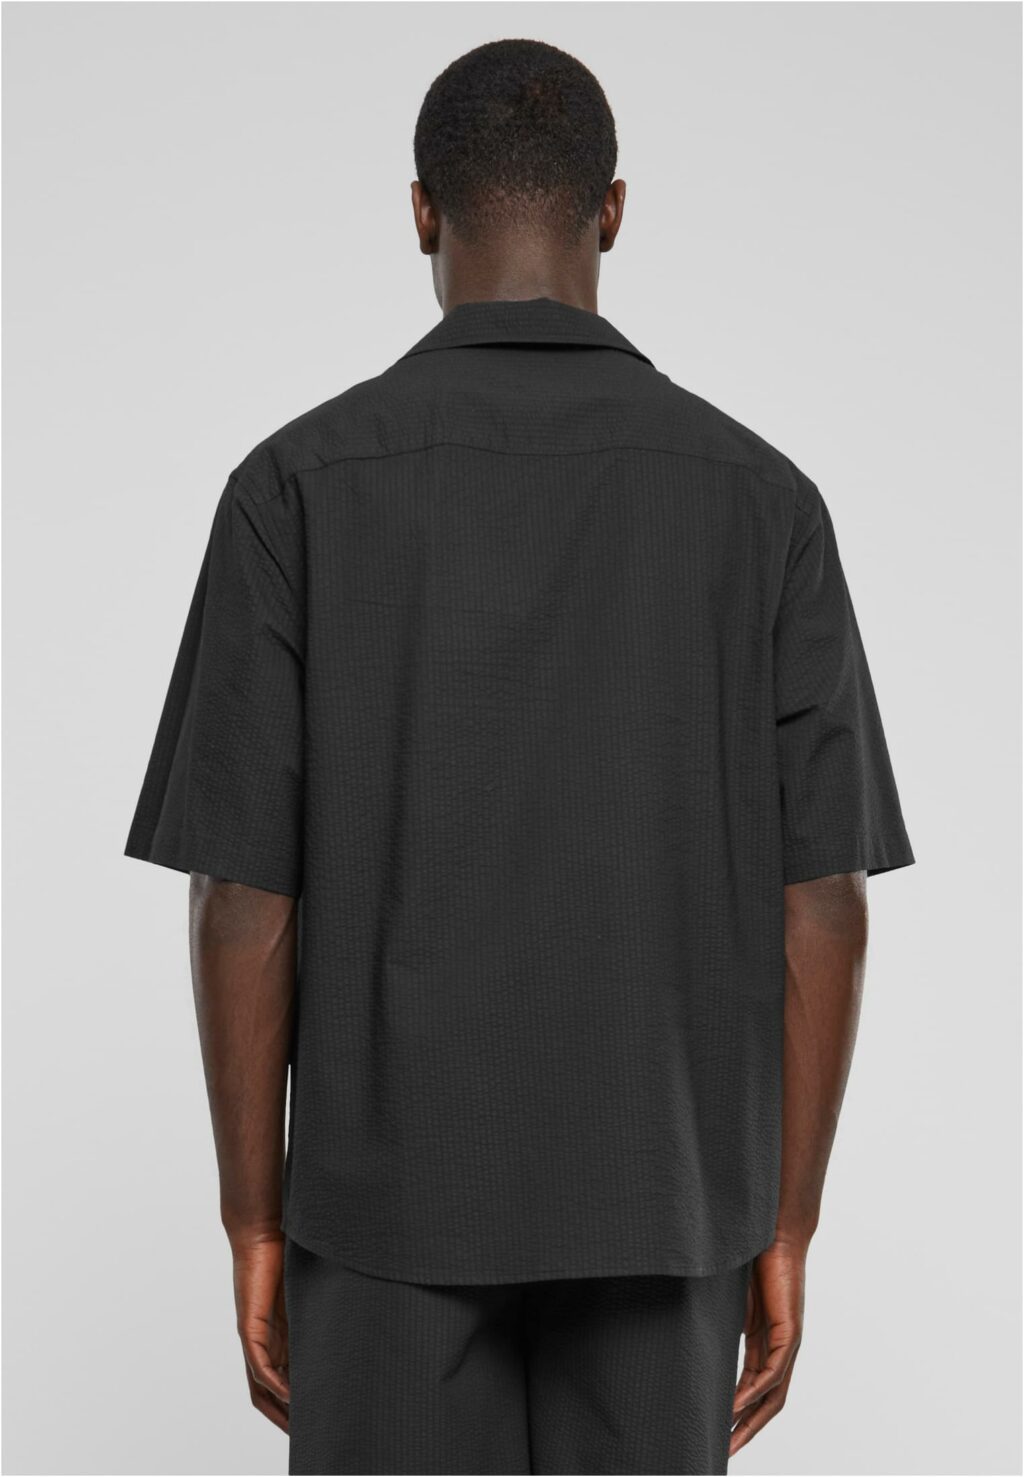 Urban Classics Relaxed Seersucker Short Sleeve Shirt black TB6409